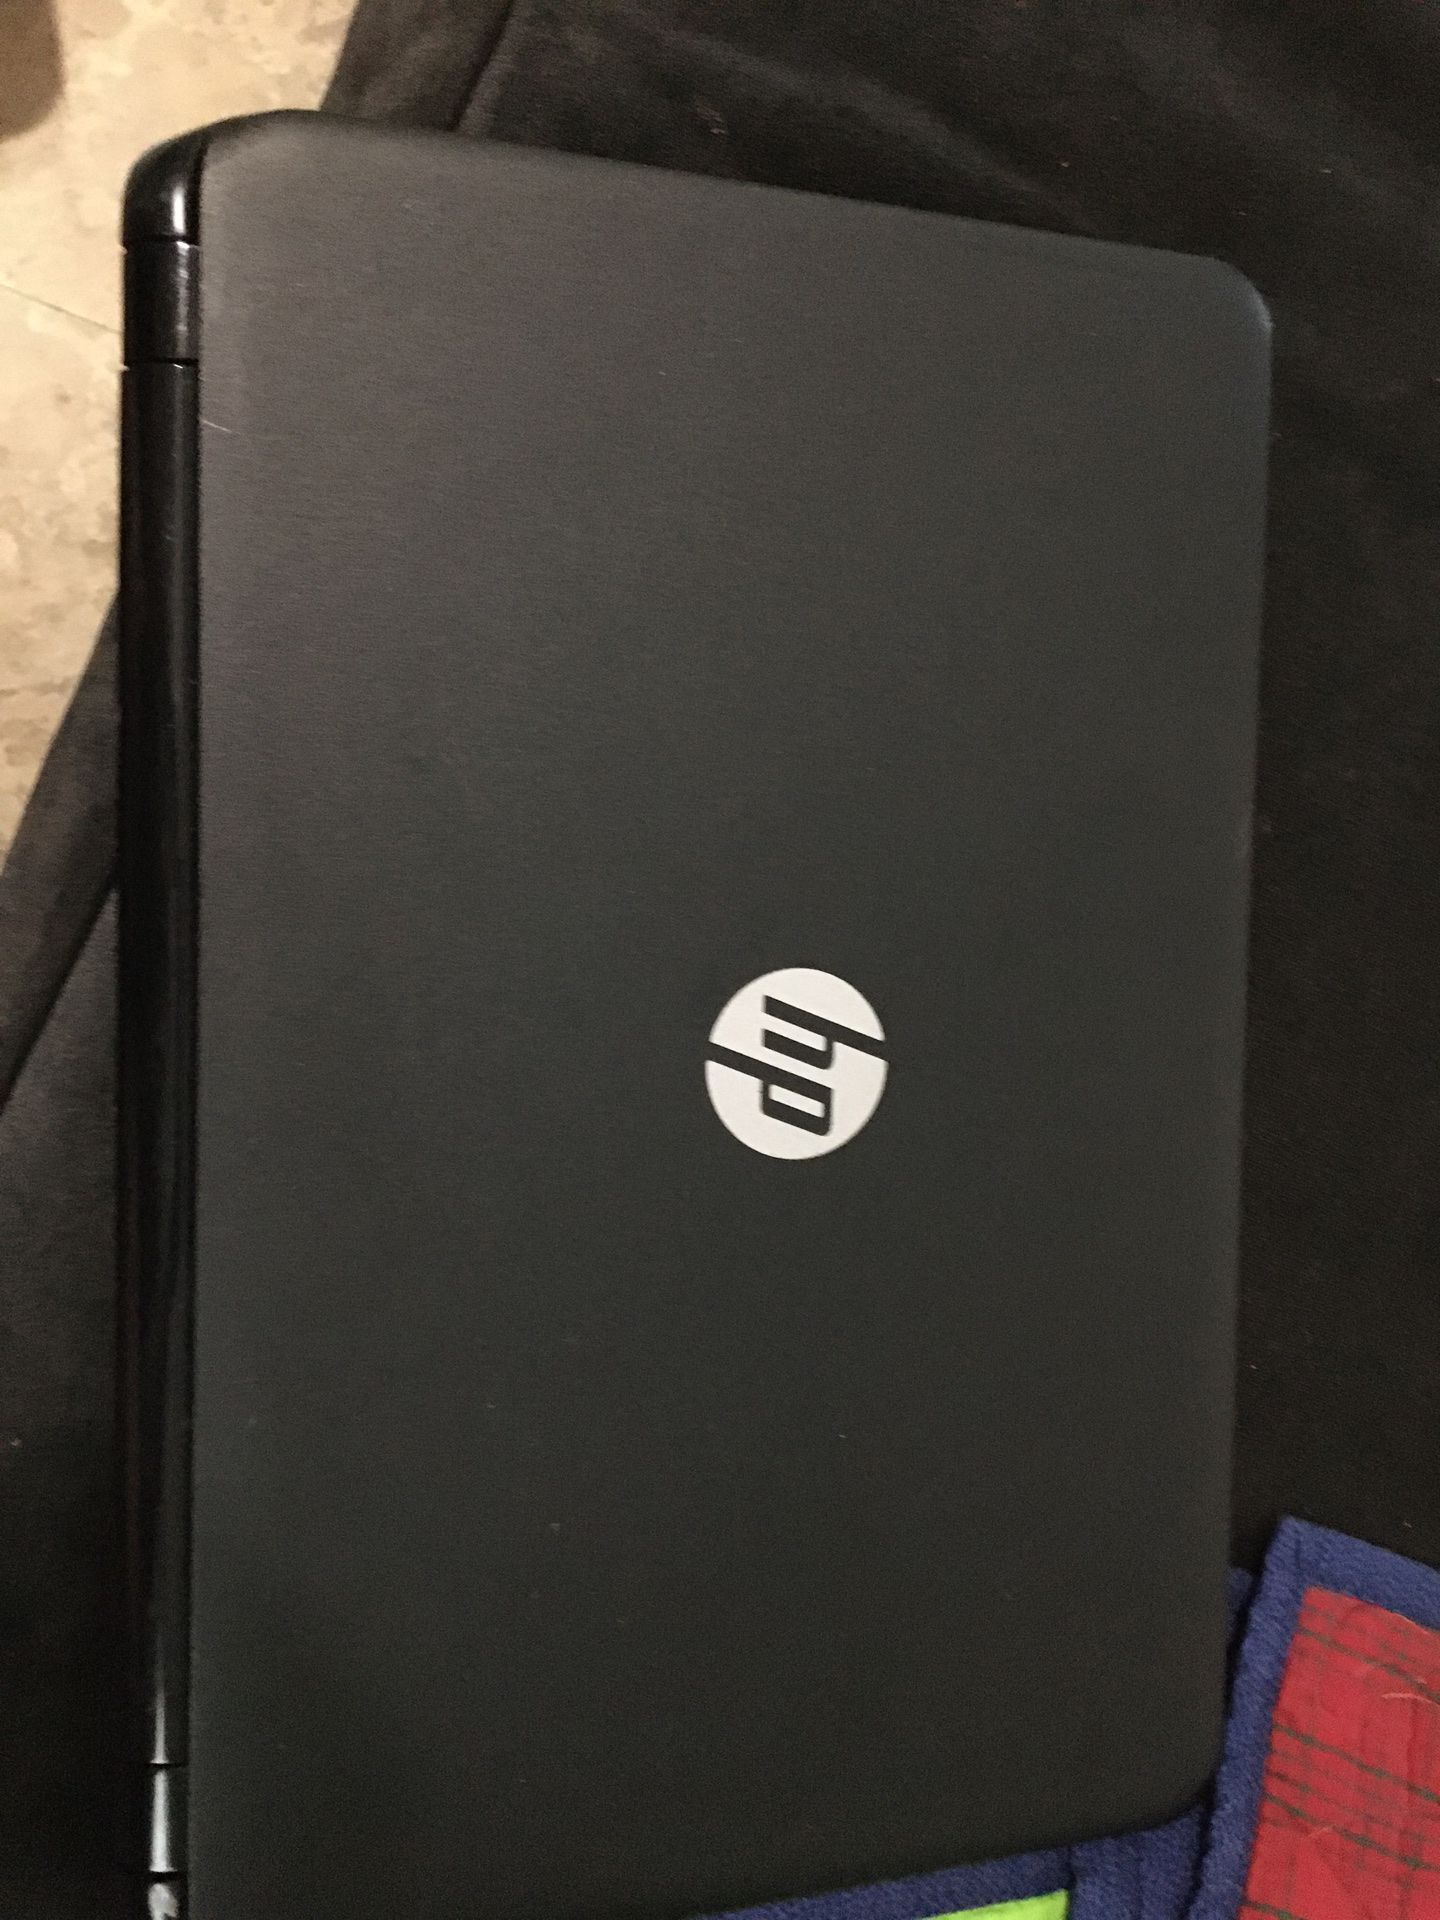 HP 15 laptop